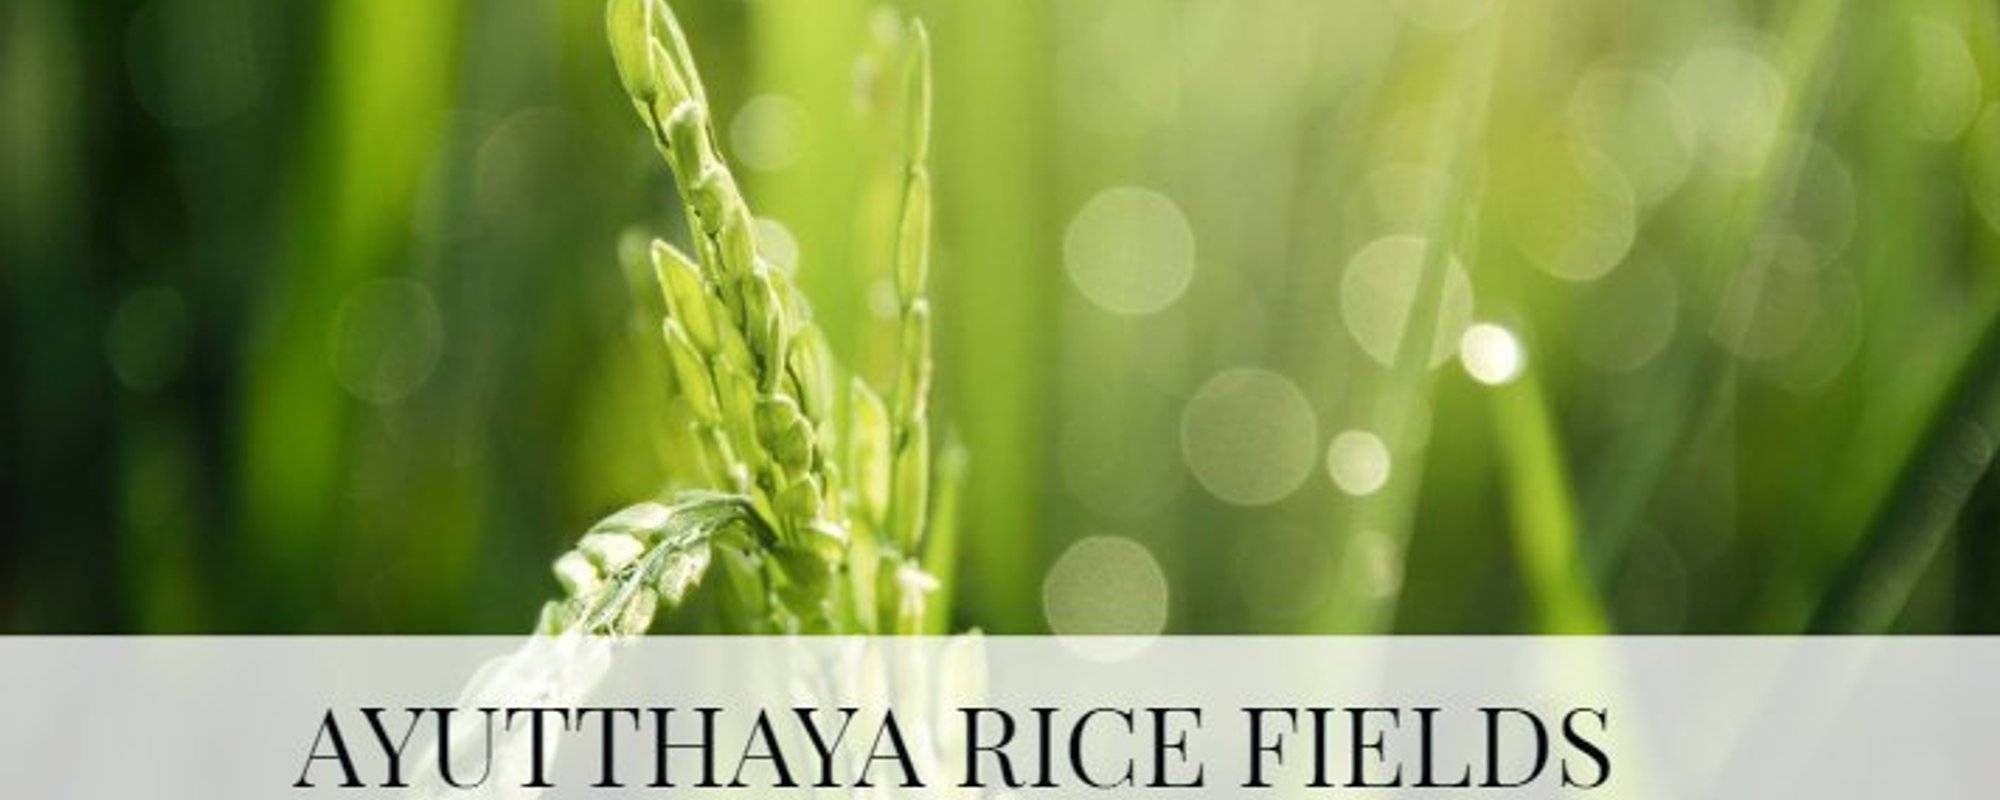 Ayutthaya Rice fields - Photoreport (Thailand)